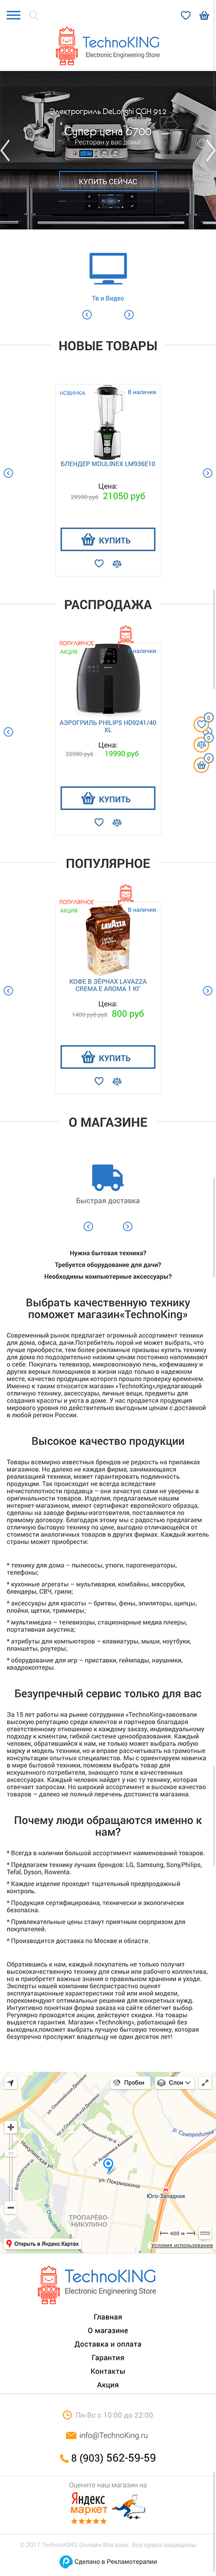 Techno-King phone view